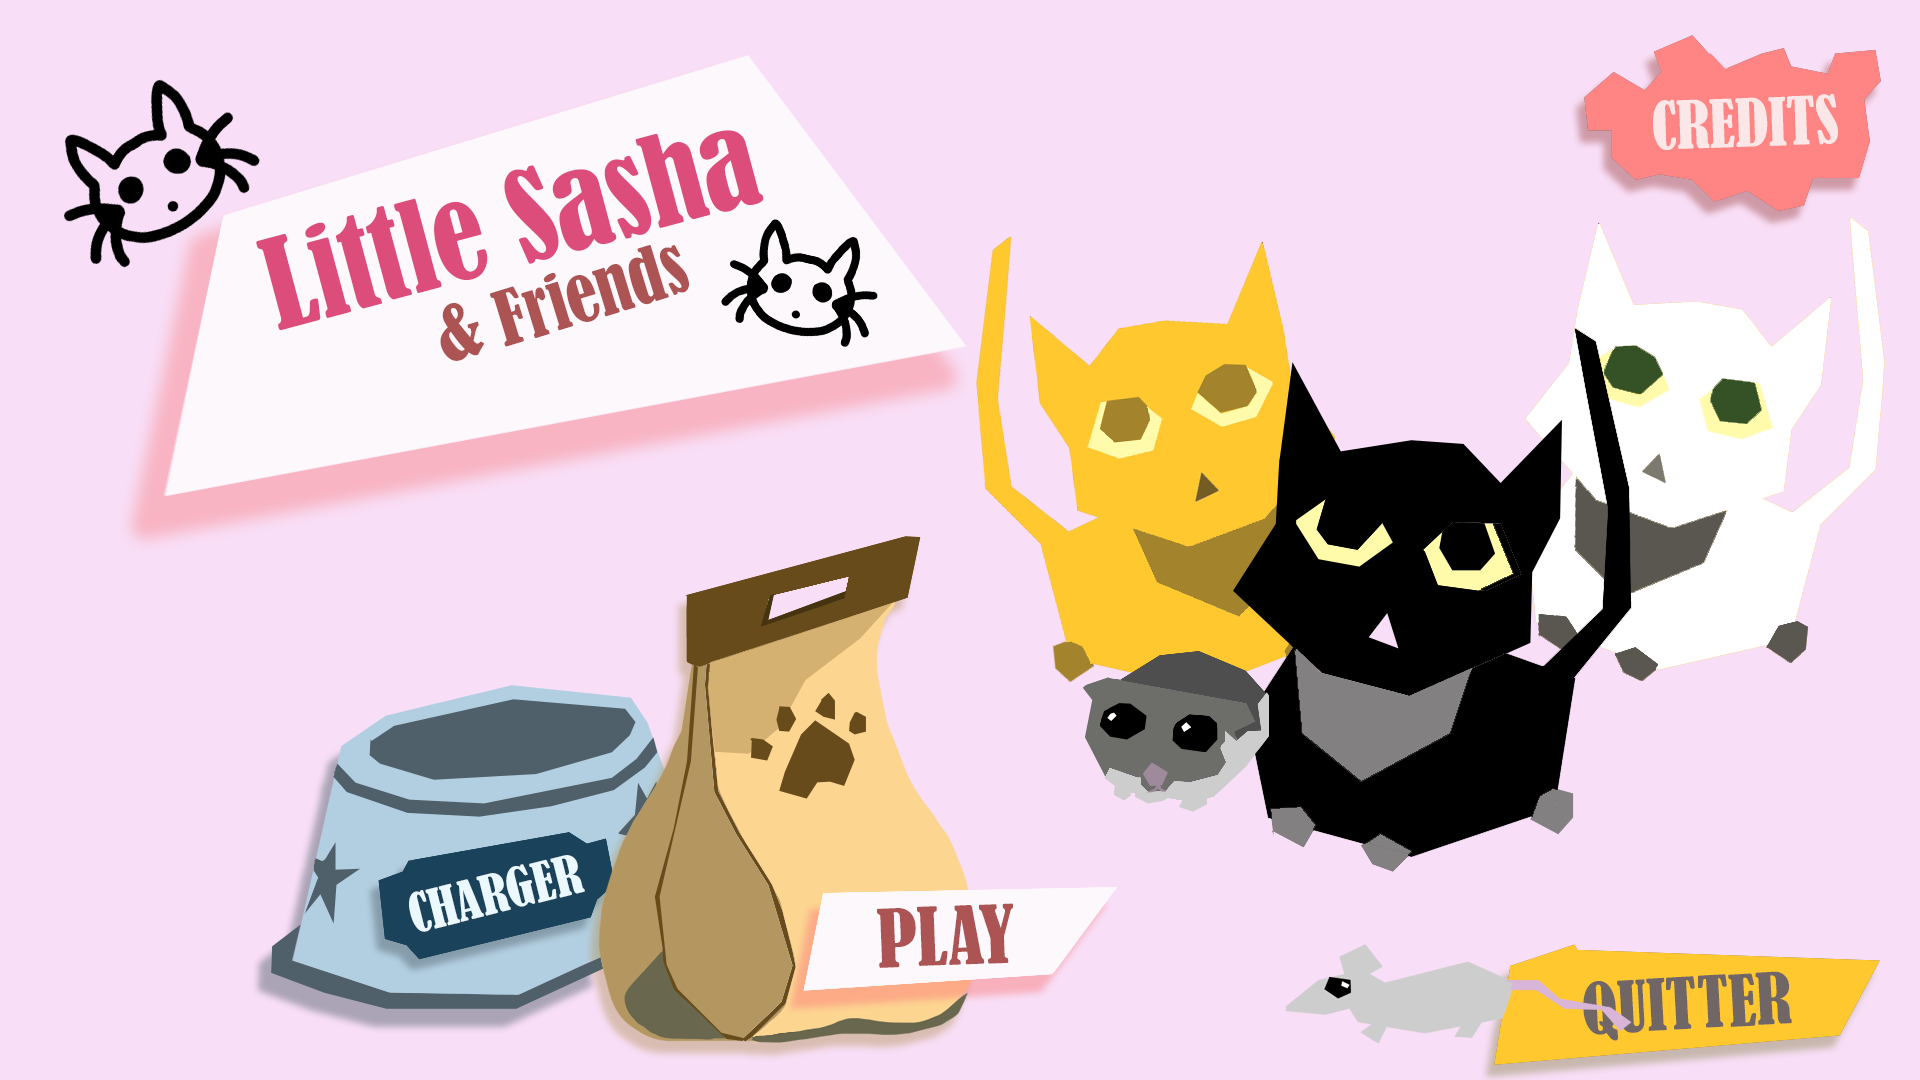 Little Sasha & friends